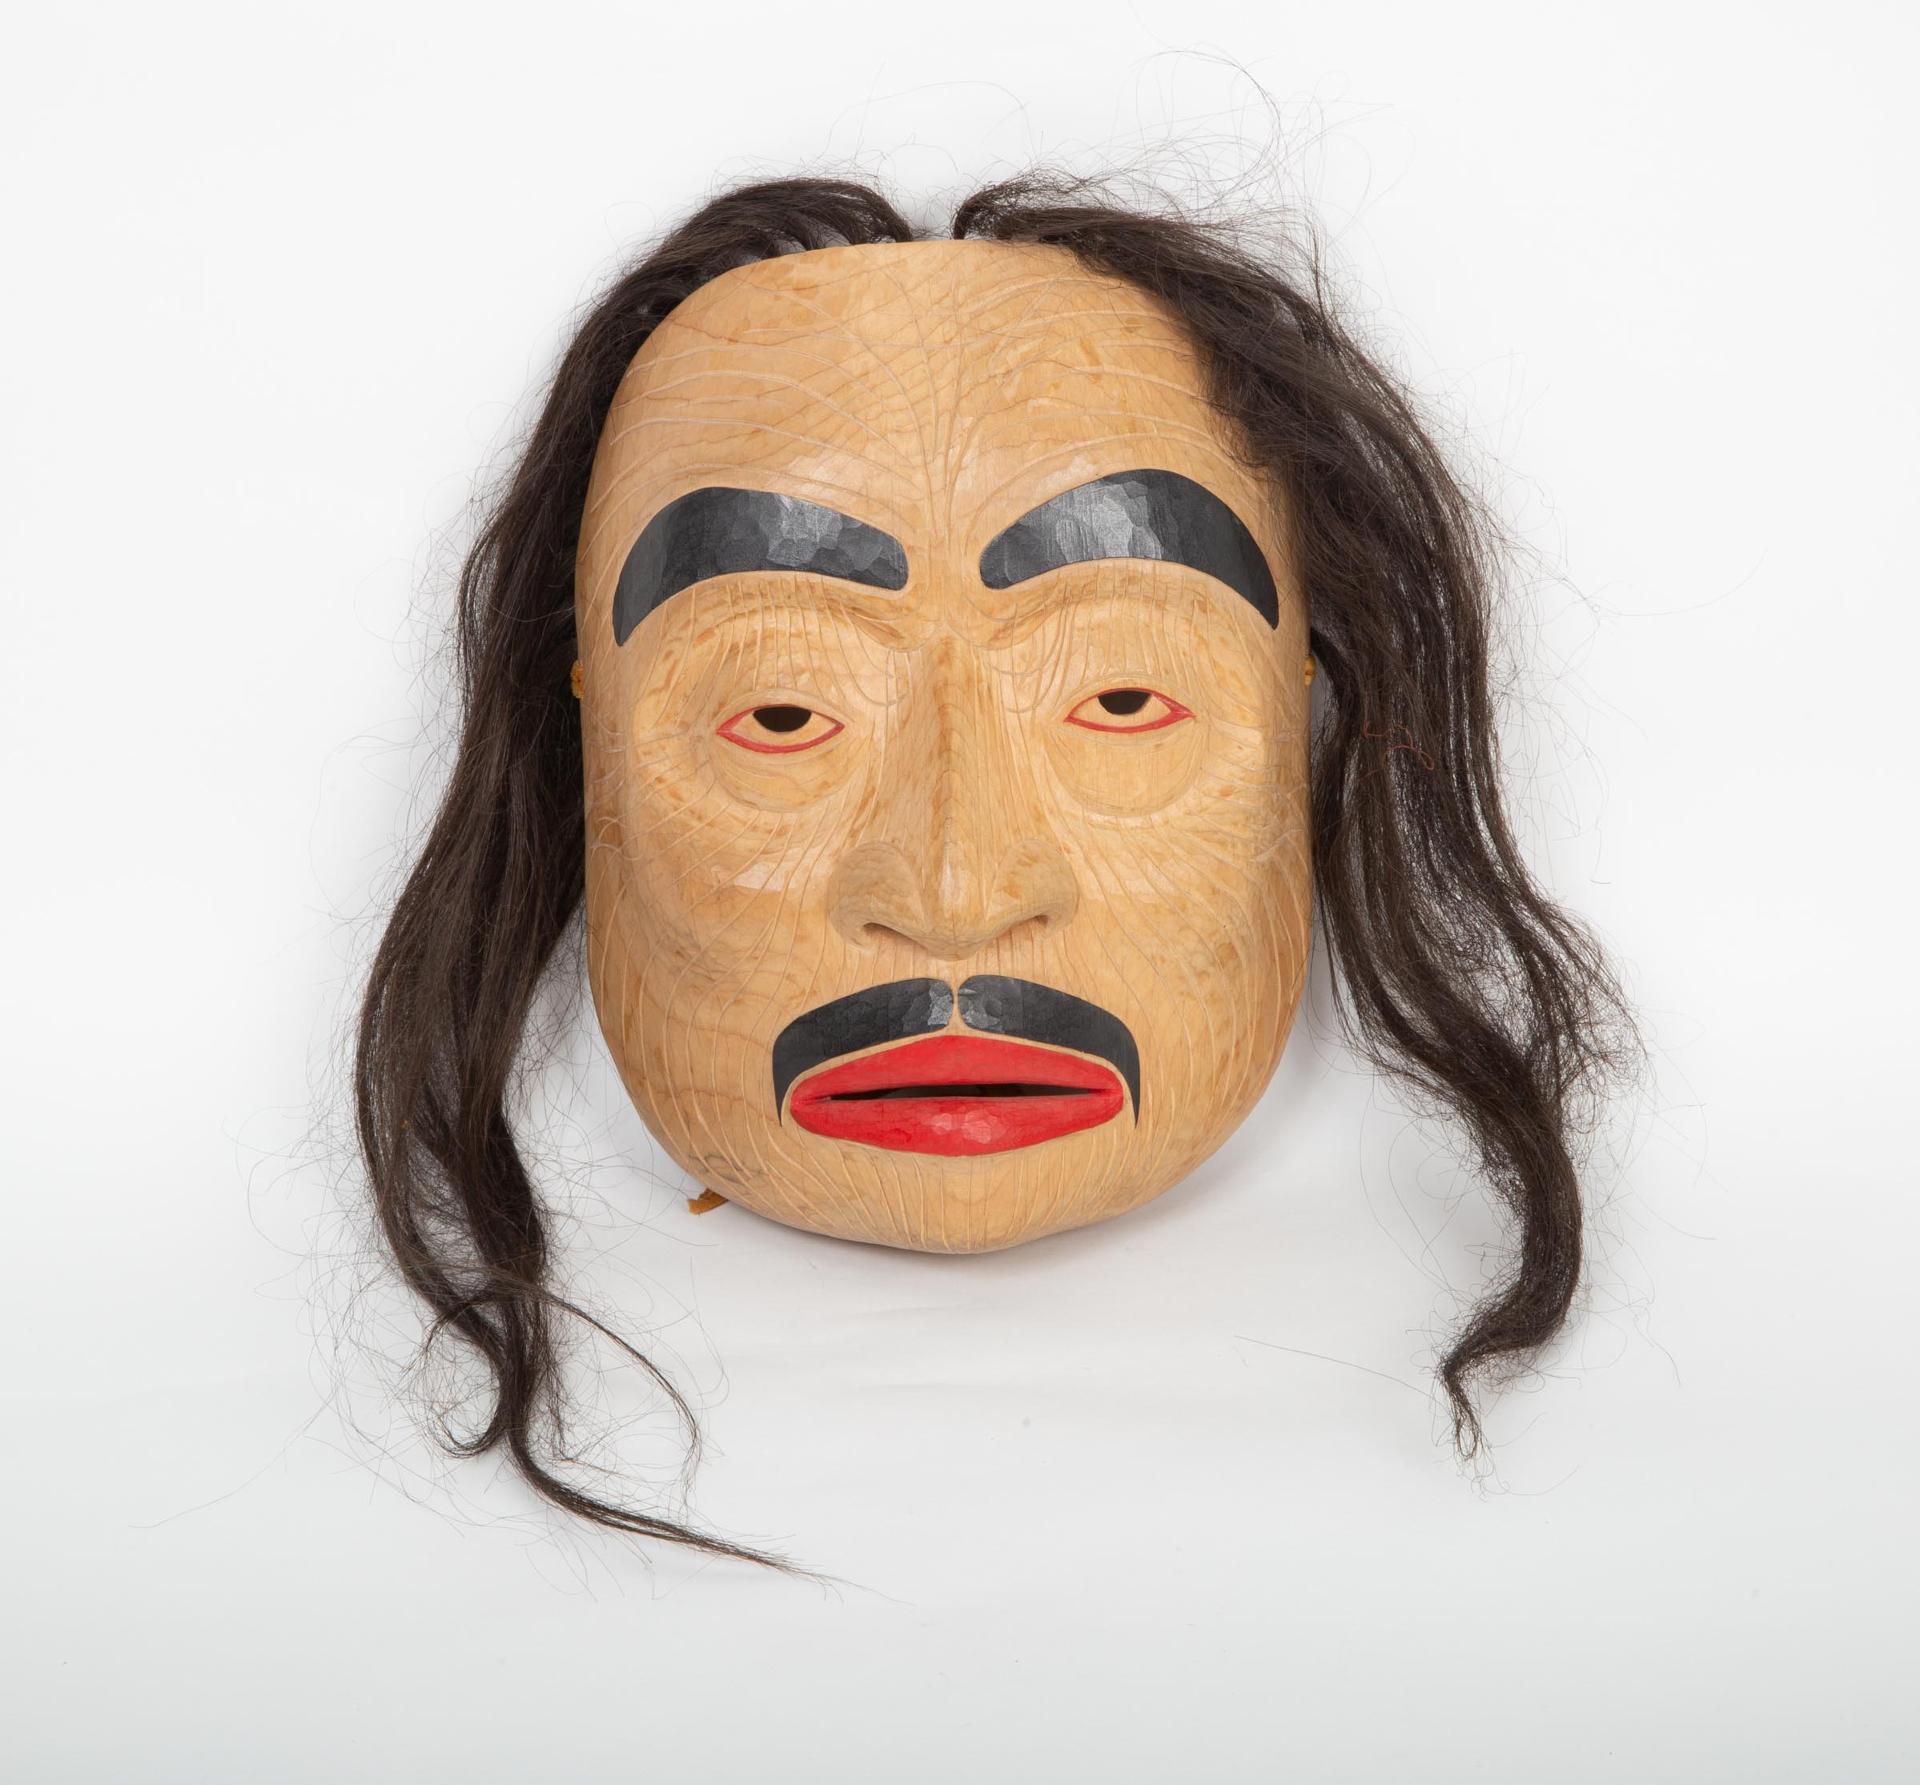 Glen Rabena (1953) - Human Face Mask